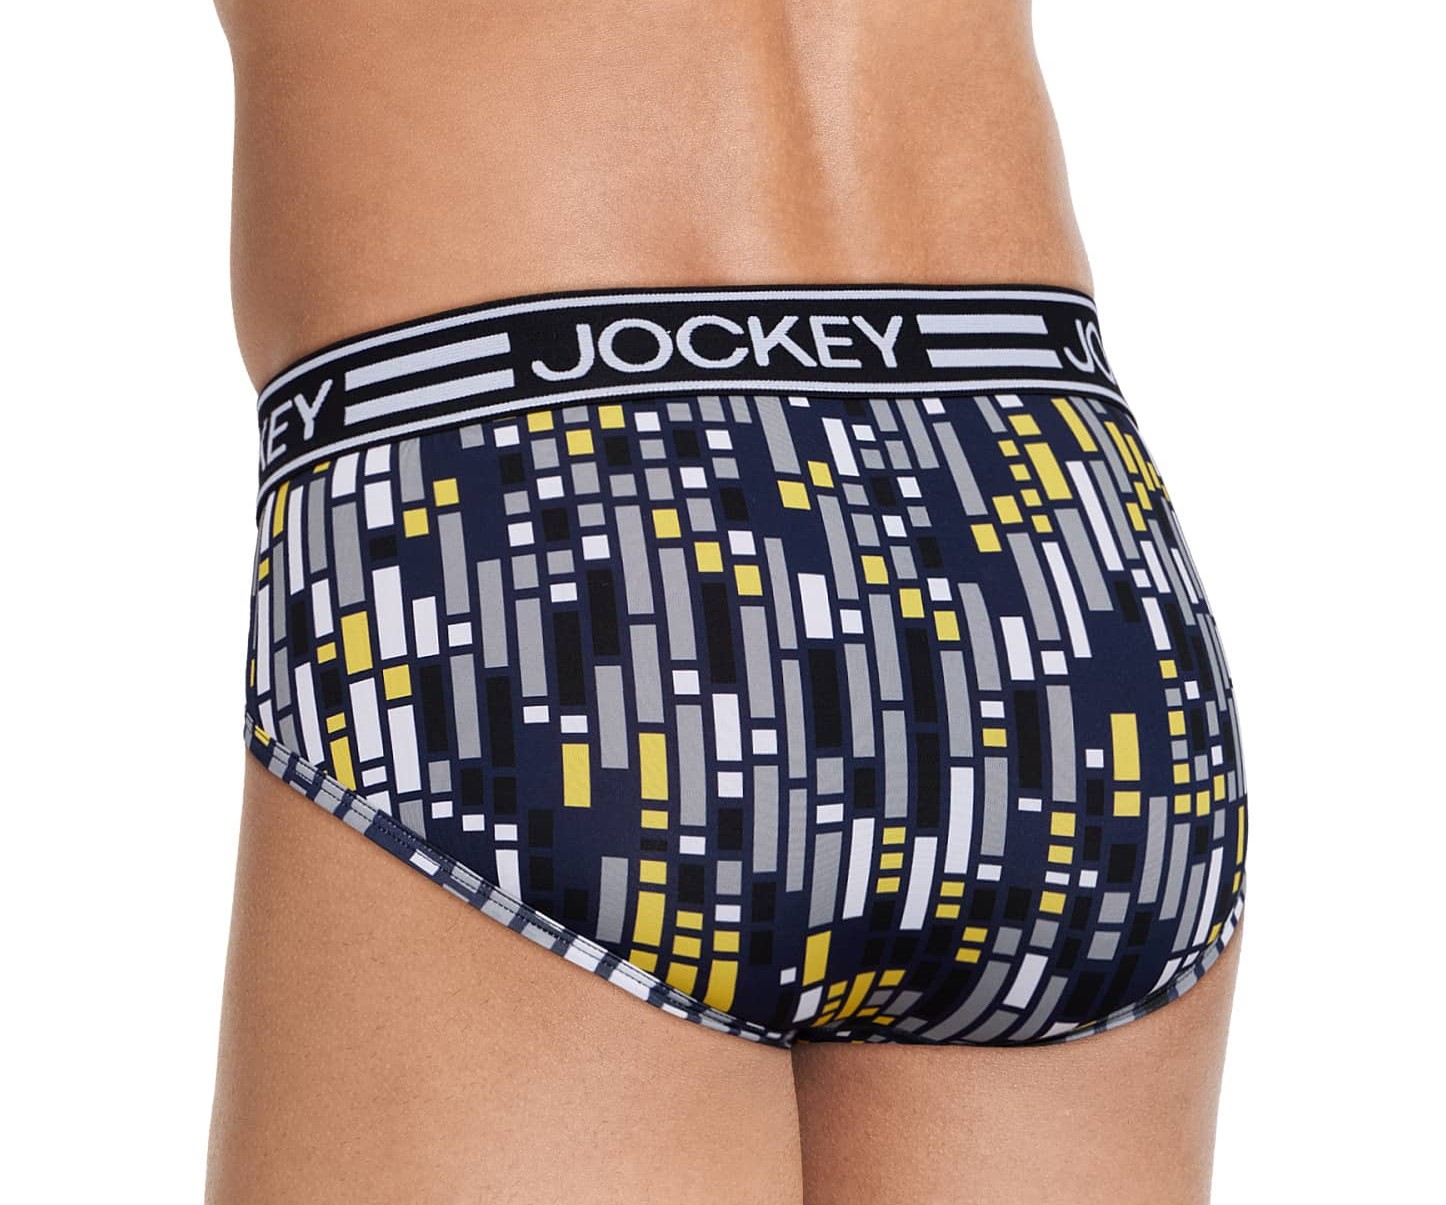 12 Best Men’s Jockey Underwear Briefs for 2023